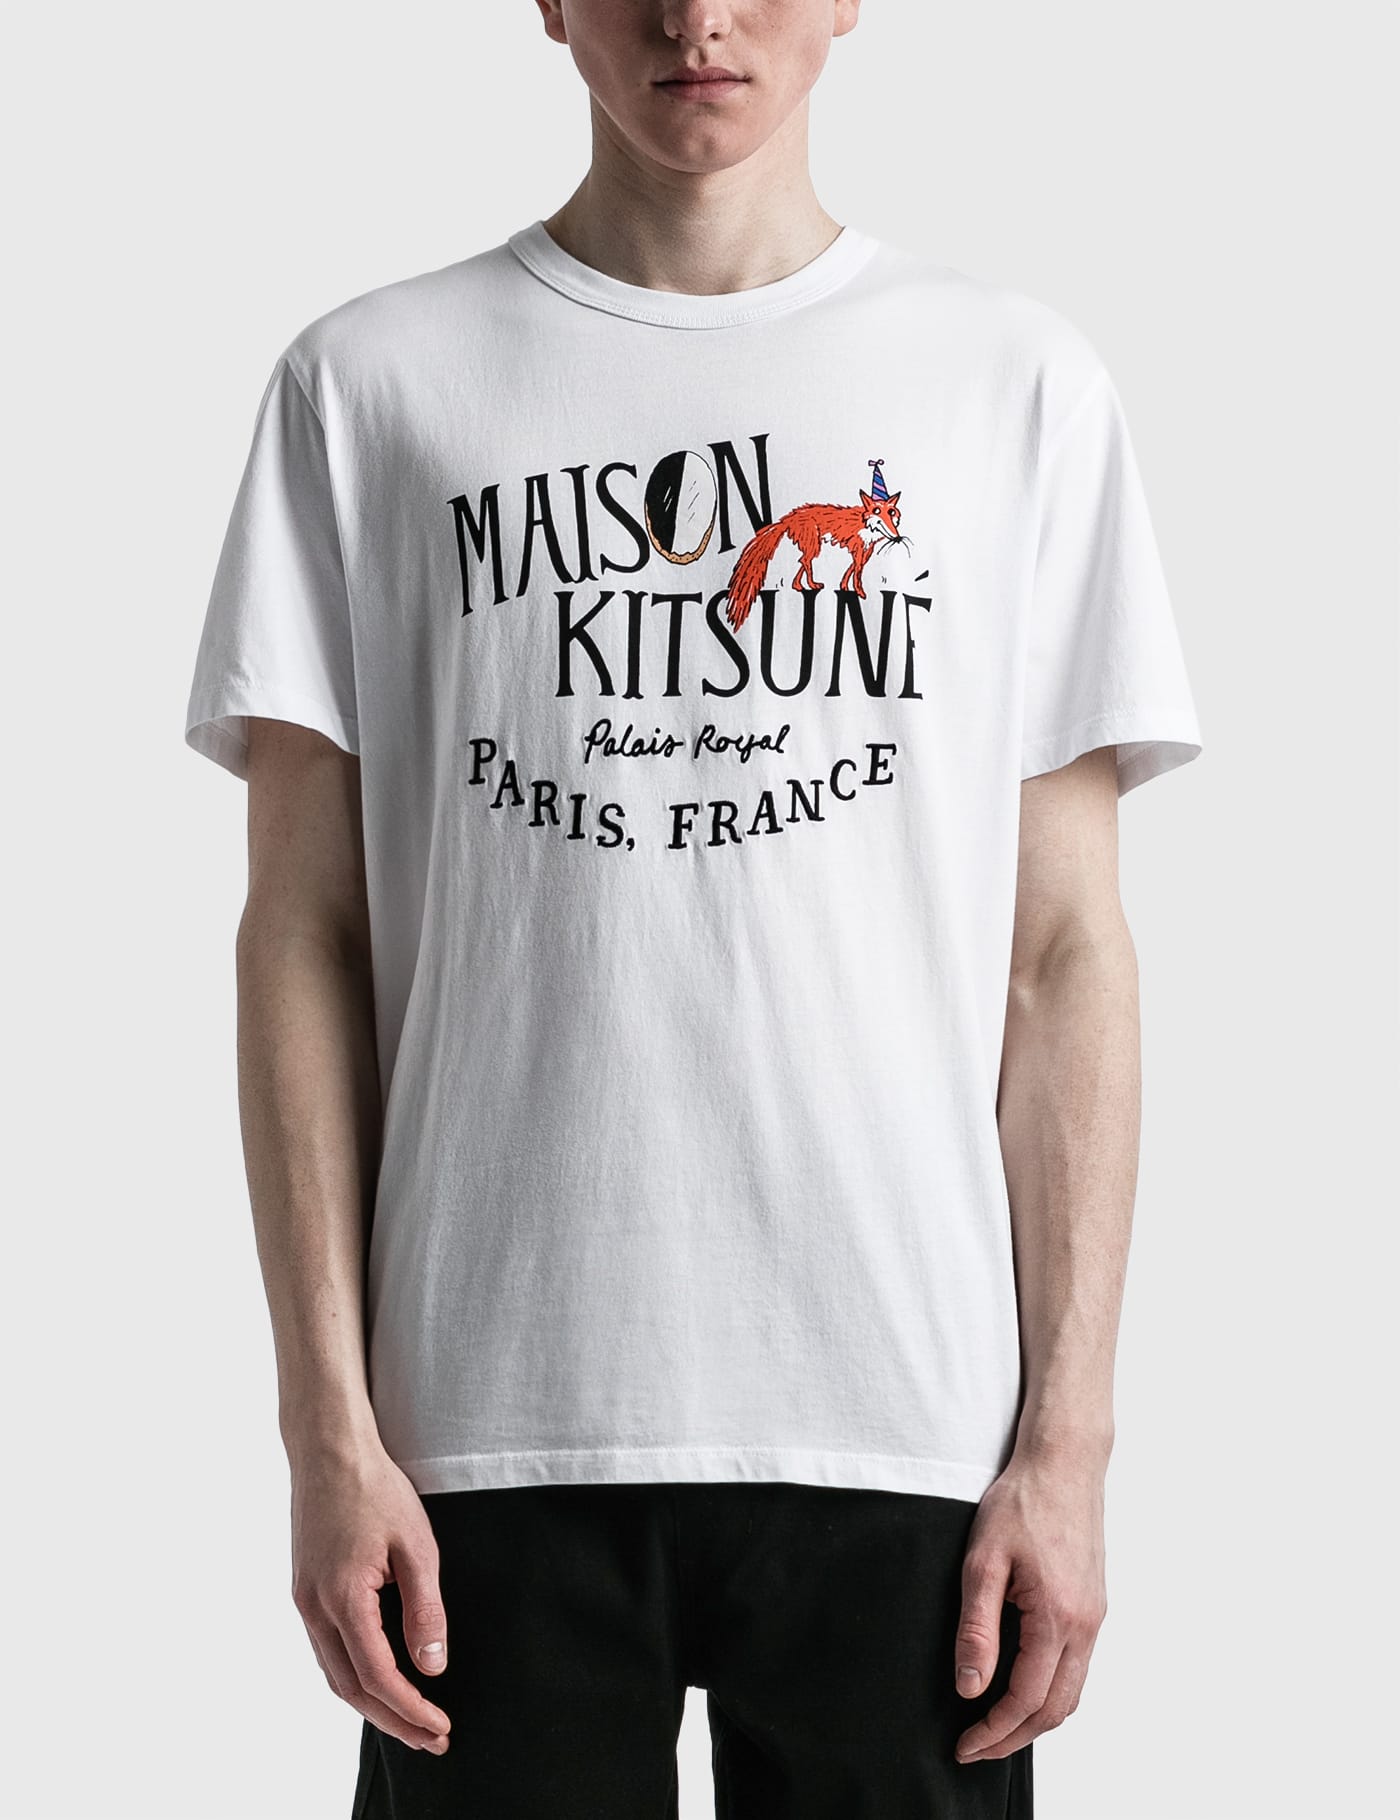 Maison Kitsune - Maison Kitsuné x Olympia Le-Tan Palais Royal Cookie  Classic T-shirt | HBX - Globally Curated Fashion and Lifestyle by Hypebeast